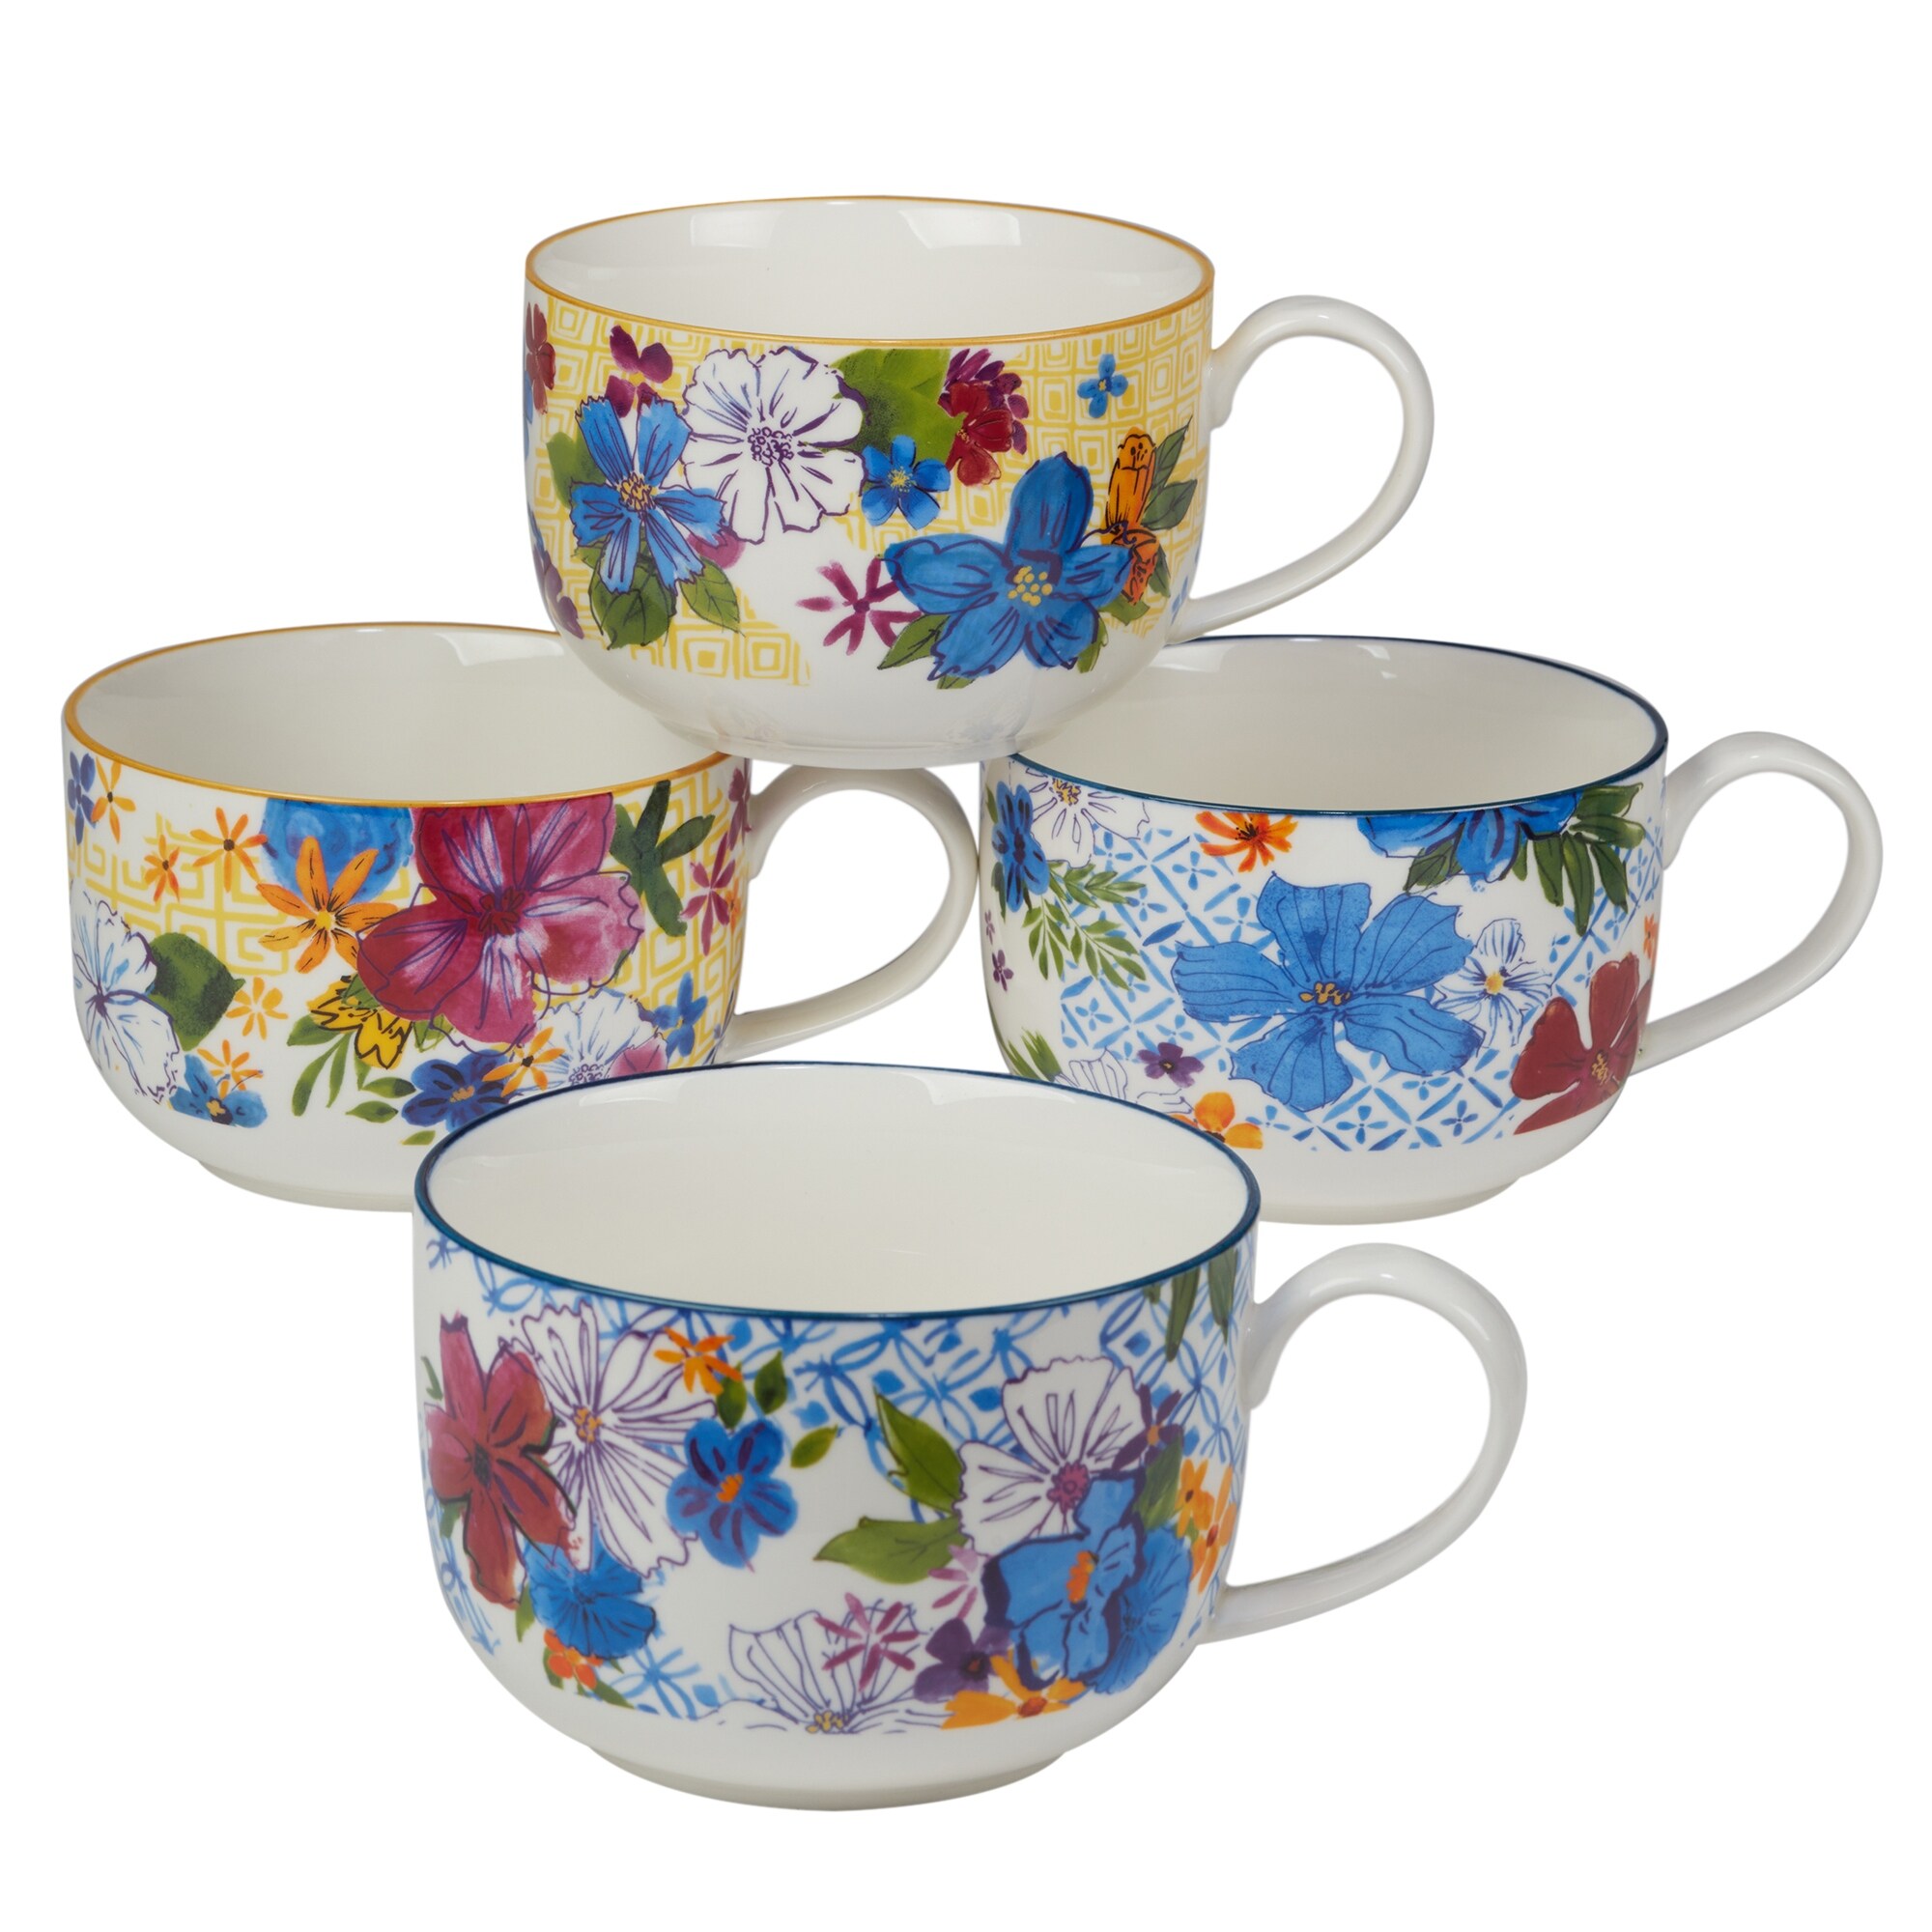 12 Oz Porcelain Mug in a Gift Box Art Collection Floral motifs by W.Morris 